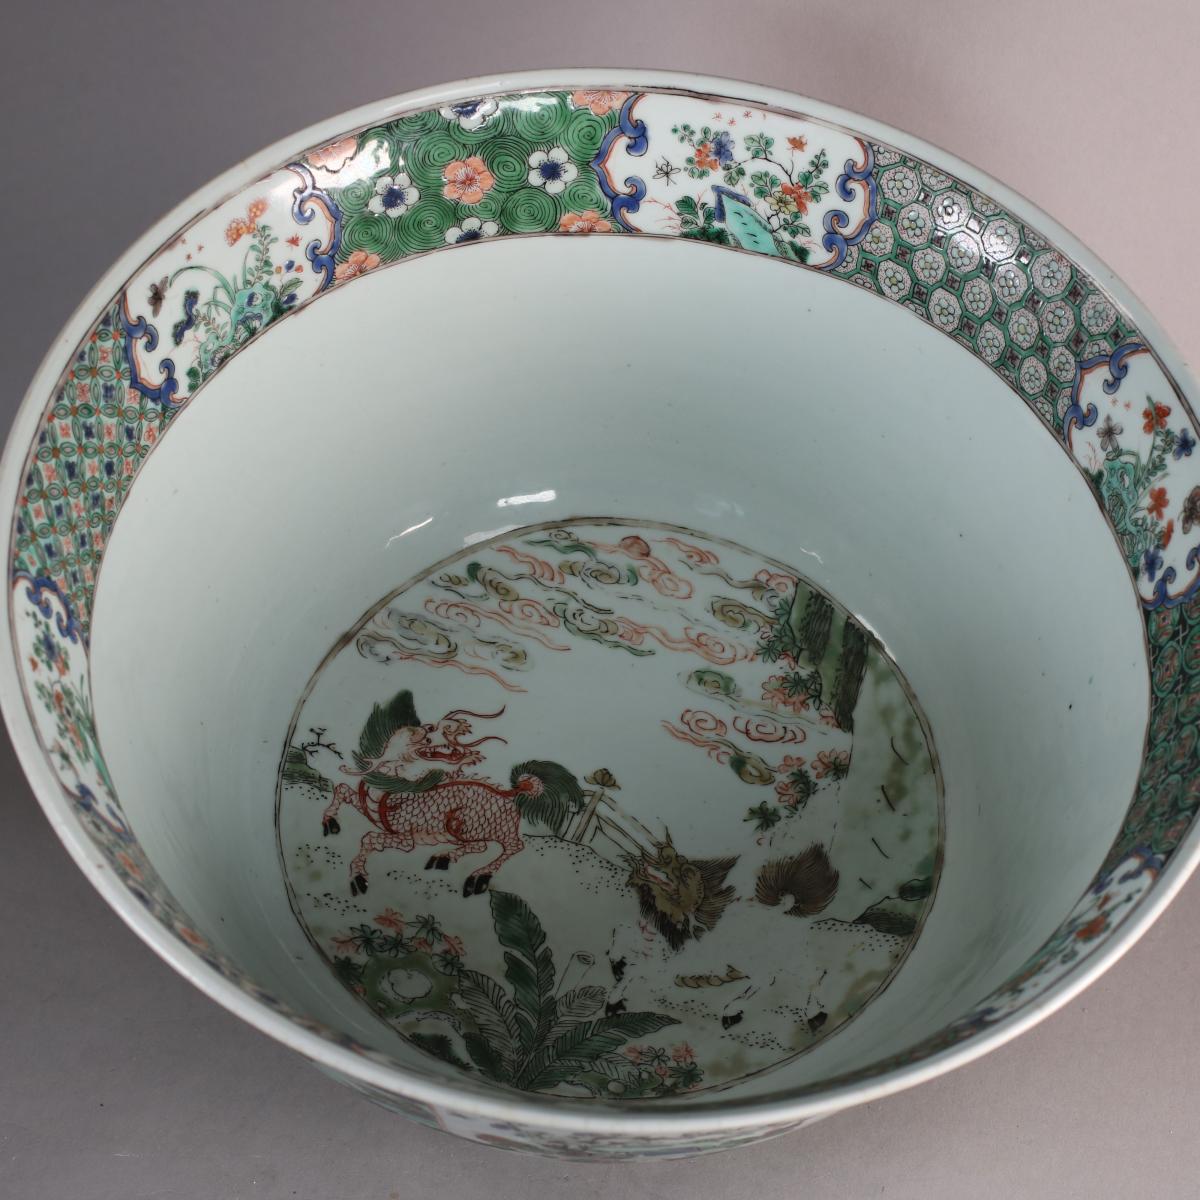 interior of bowl